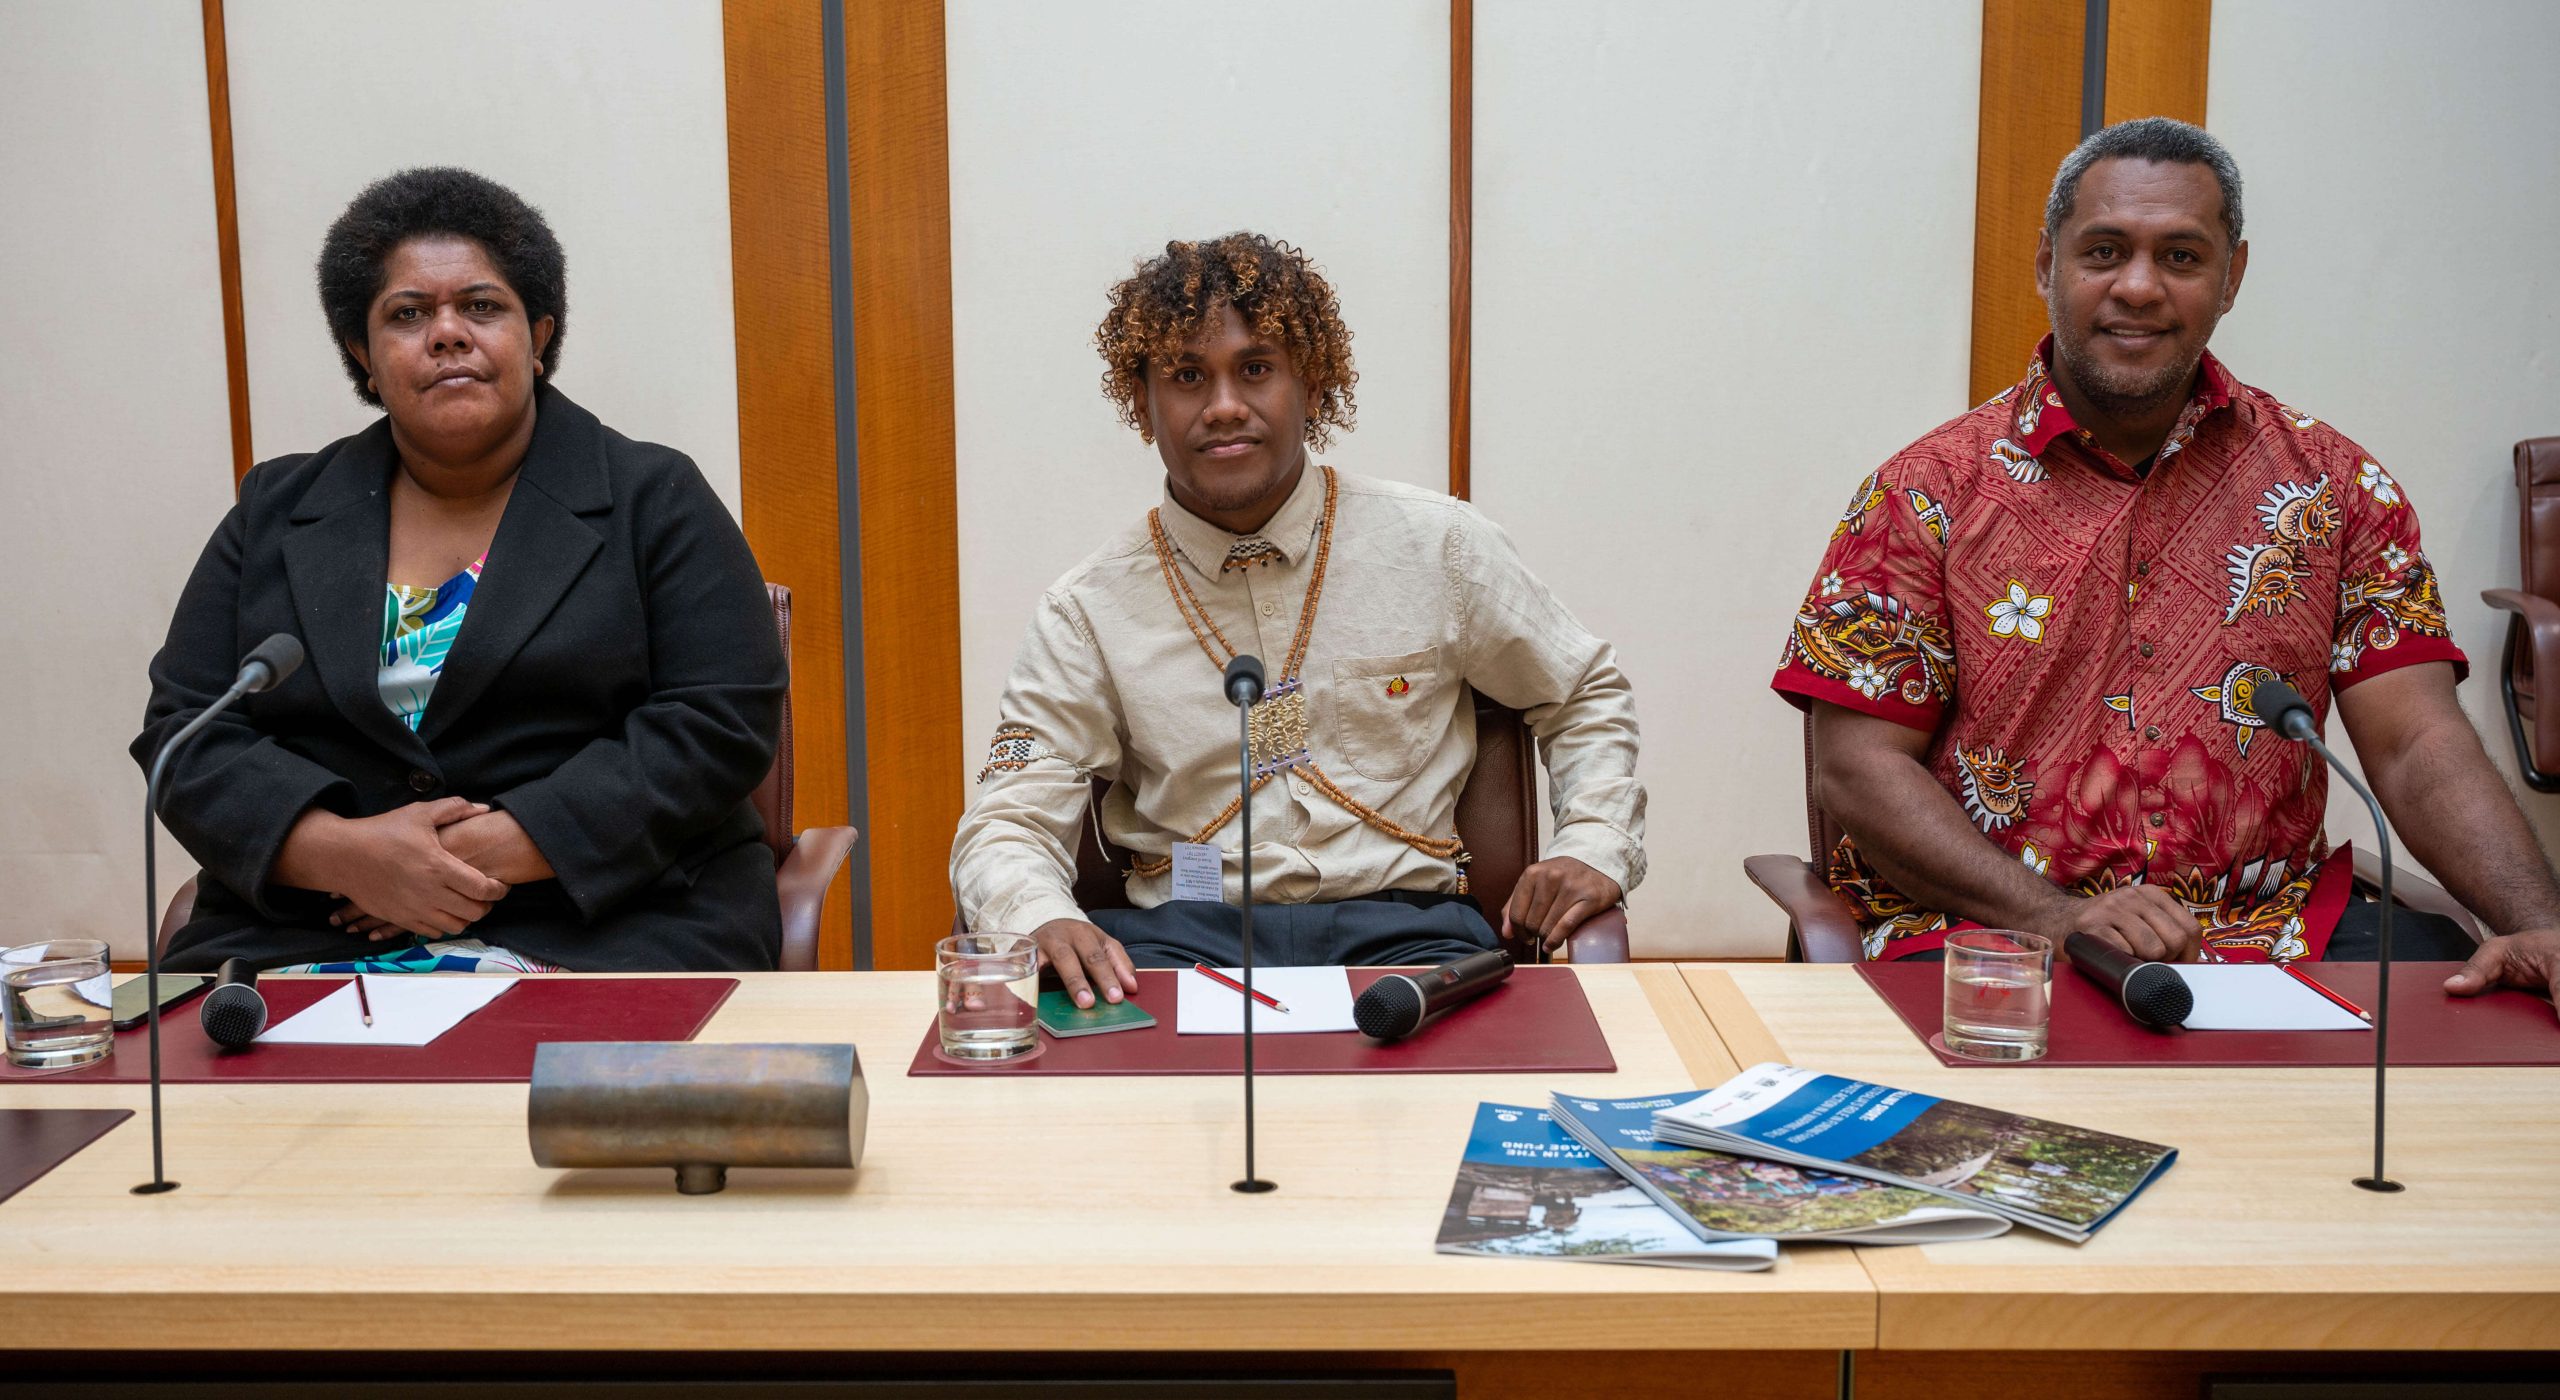 Lavenia, Zedi and Usaia (L-R) address parliamentarians at an event in the Parliament house. Photo: Oxfam Aus.